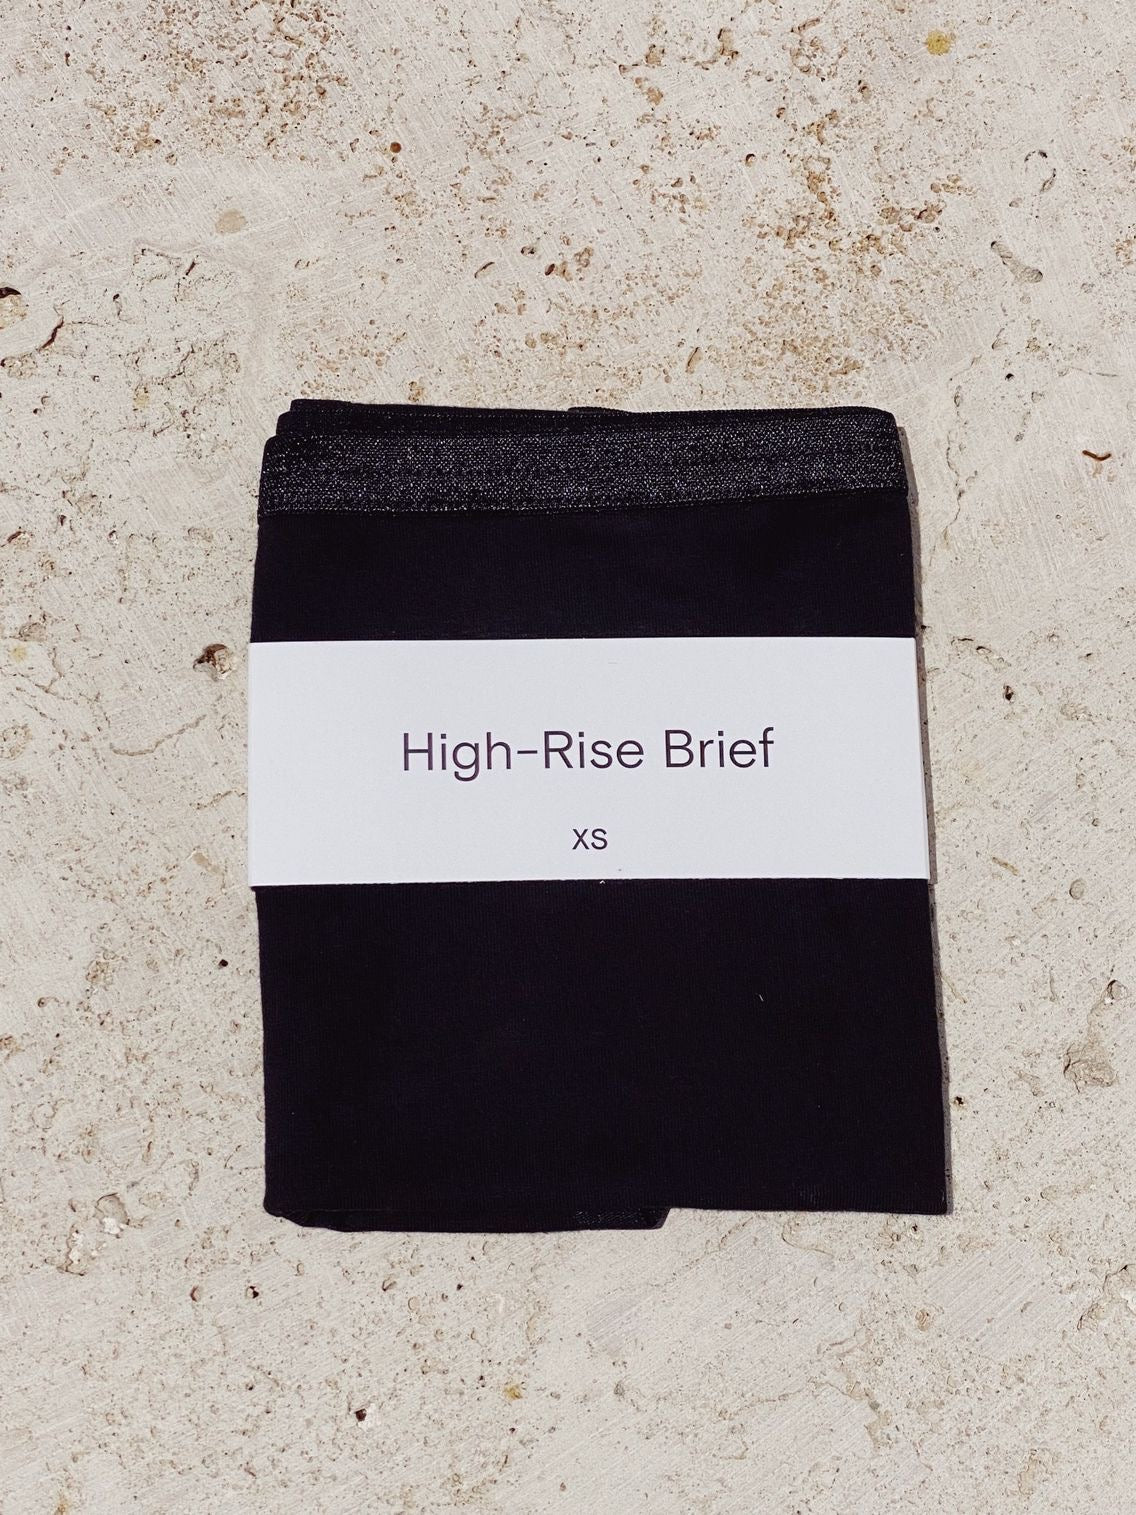 high-rise brief by knickey